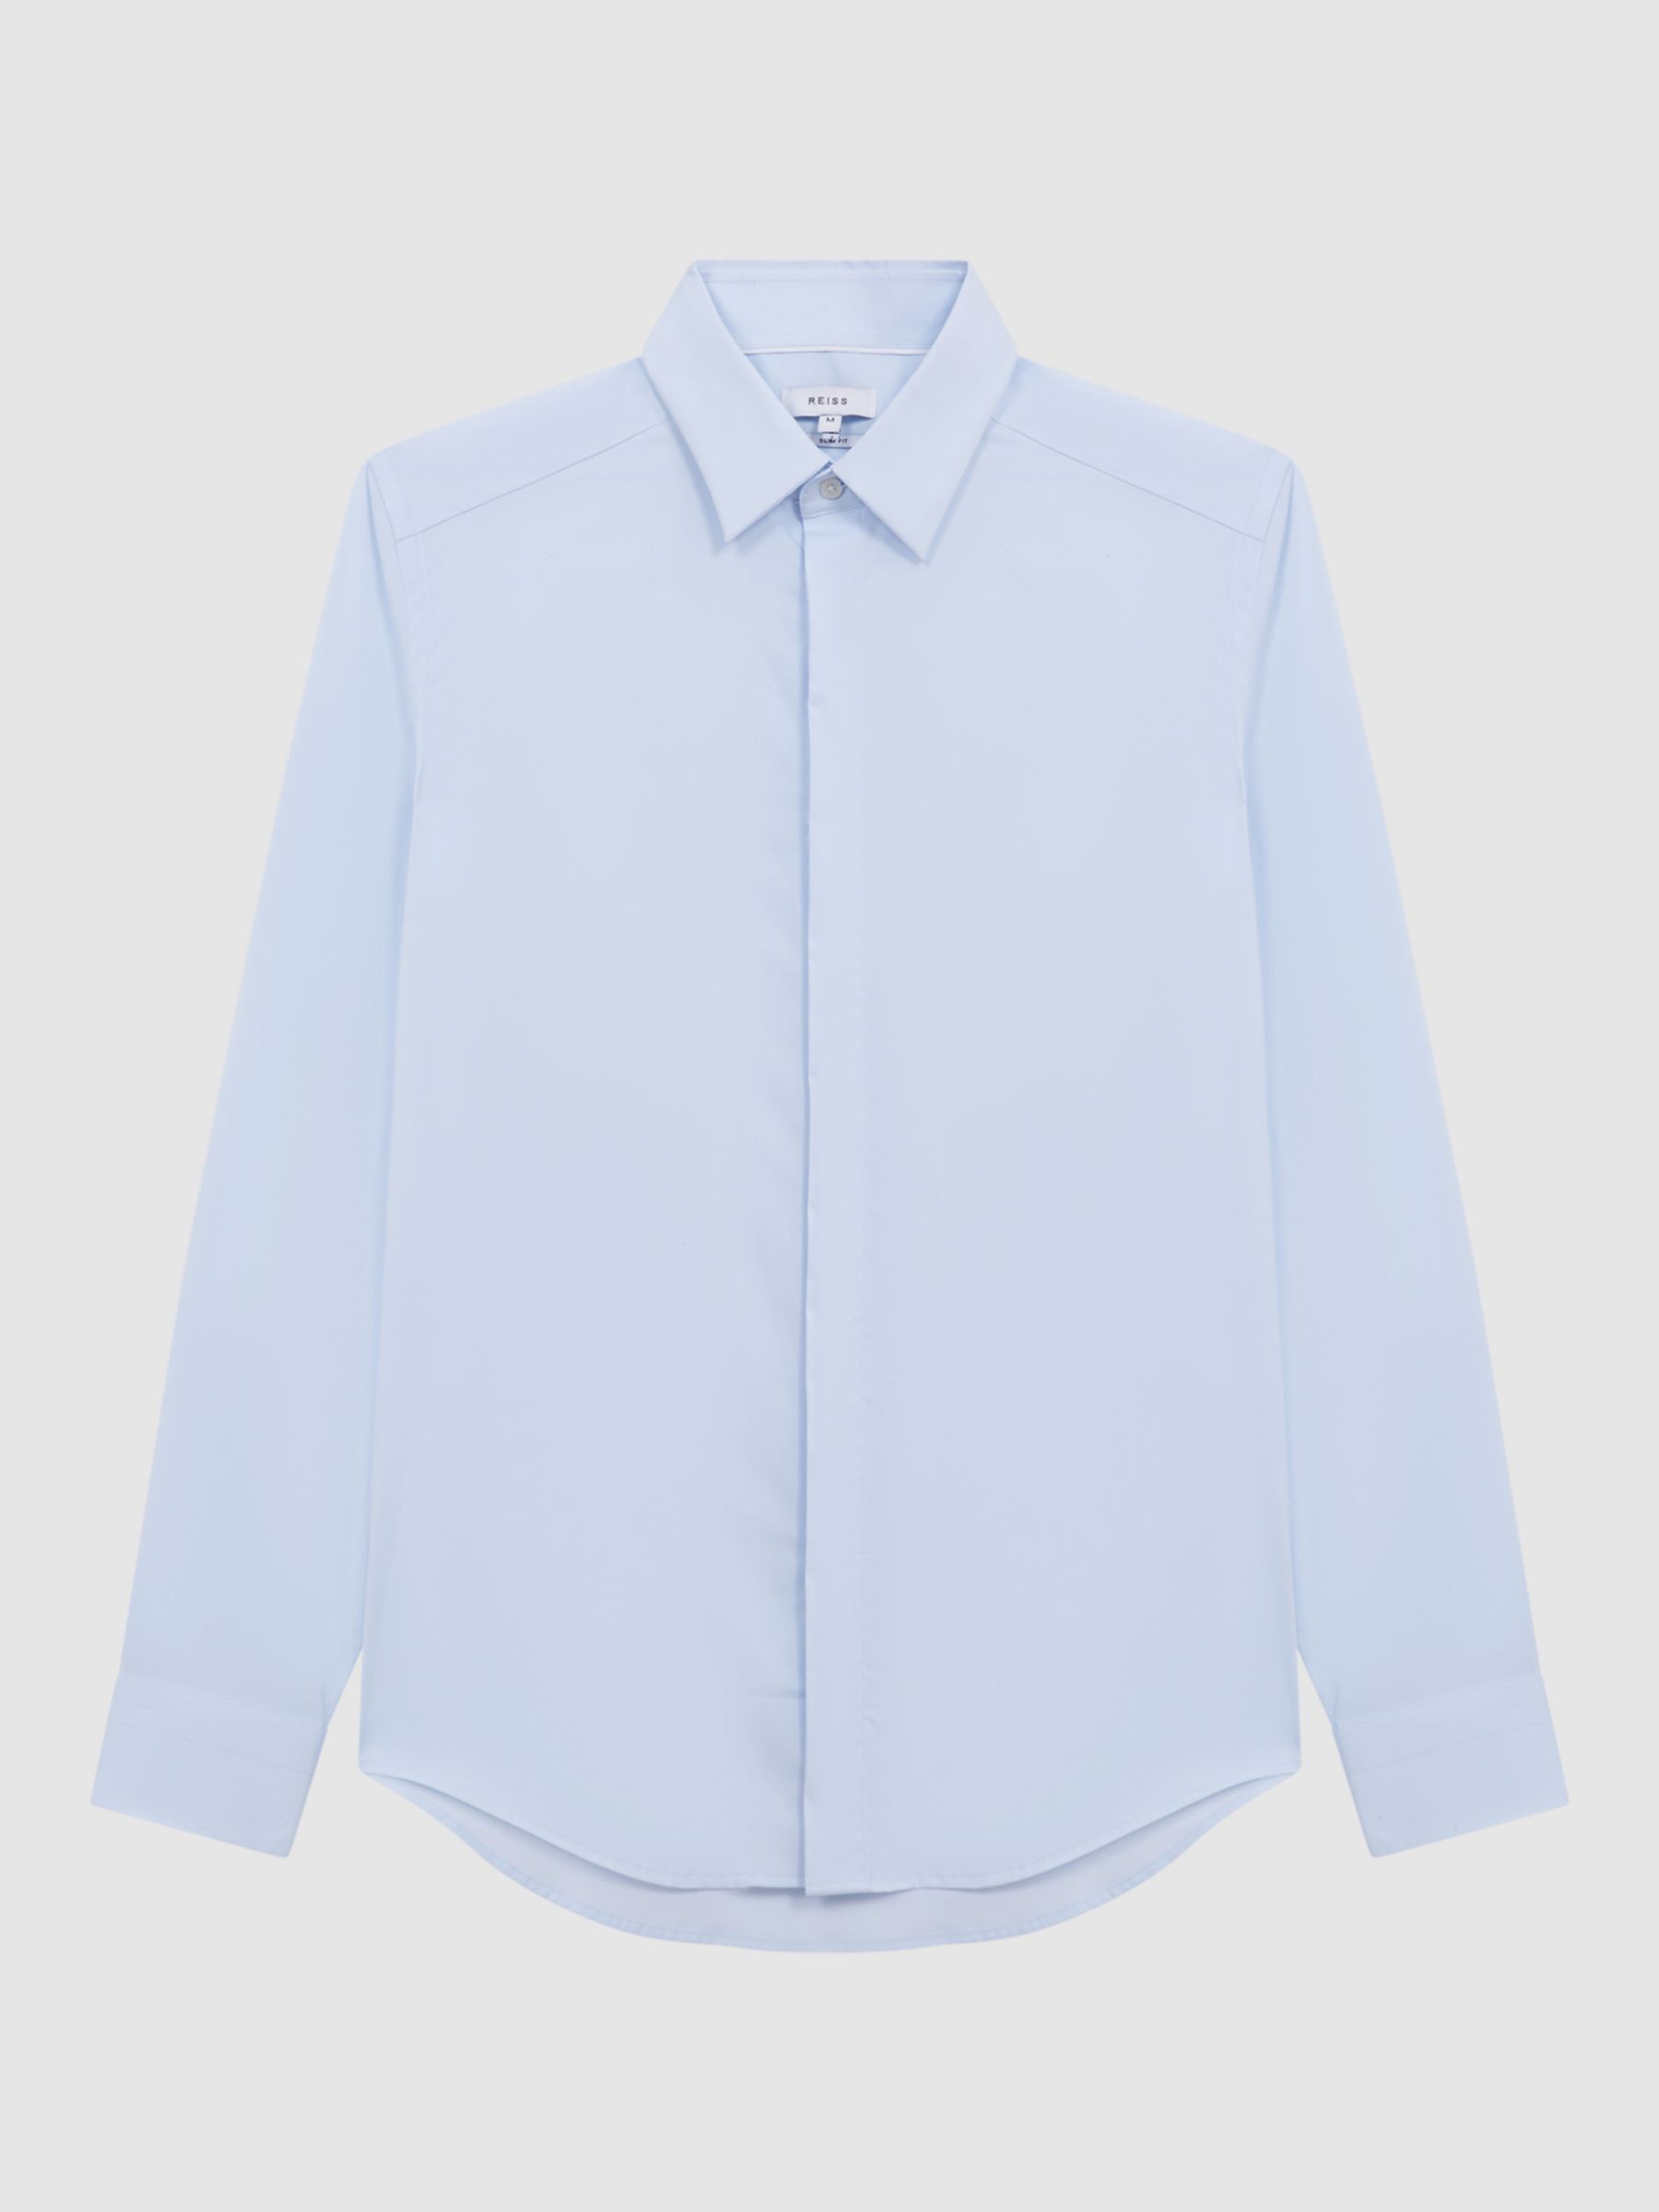 Reiss Kiana Long Sleeve Slim Fit Shirt, Blue, XS